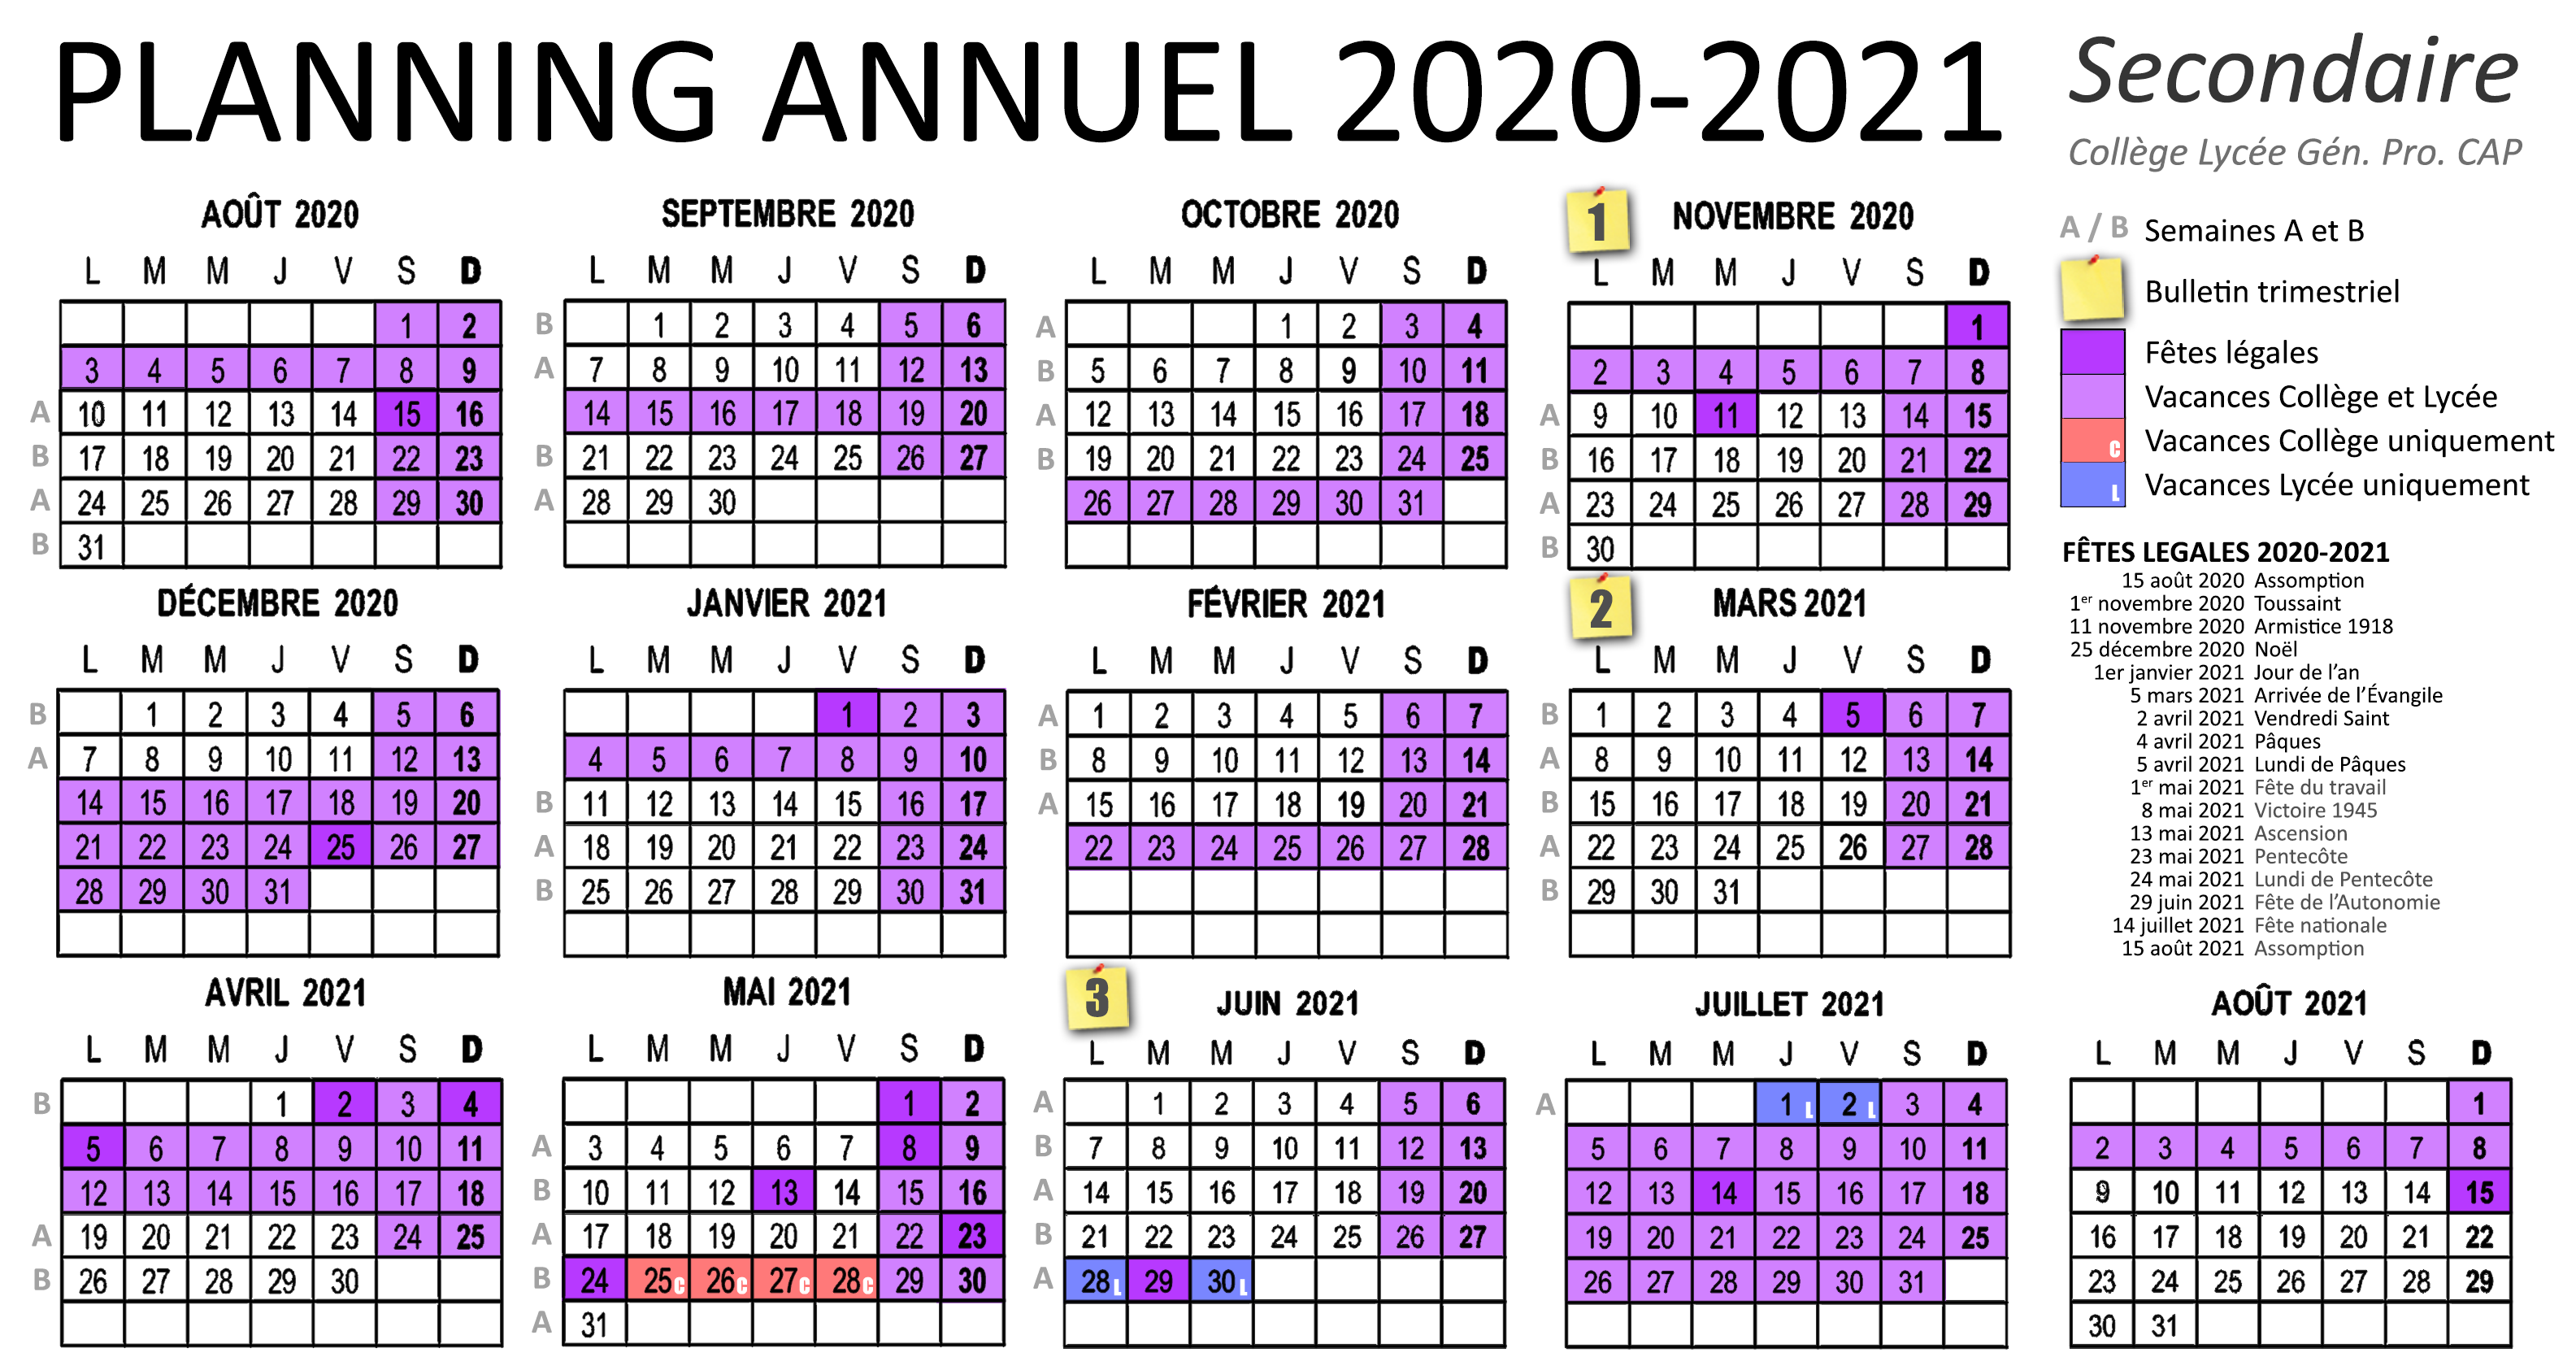 Planning annuel Secondaire